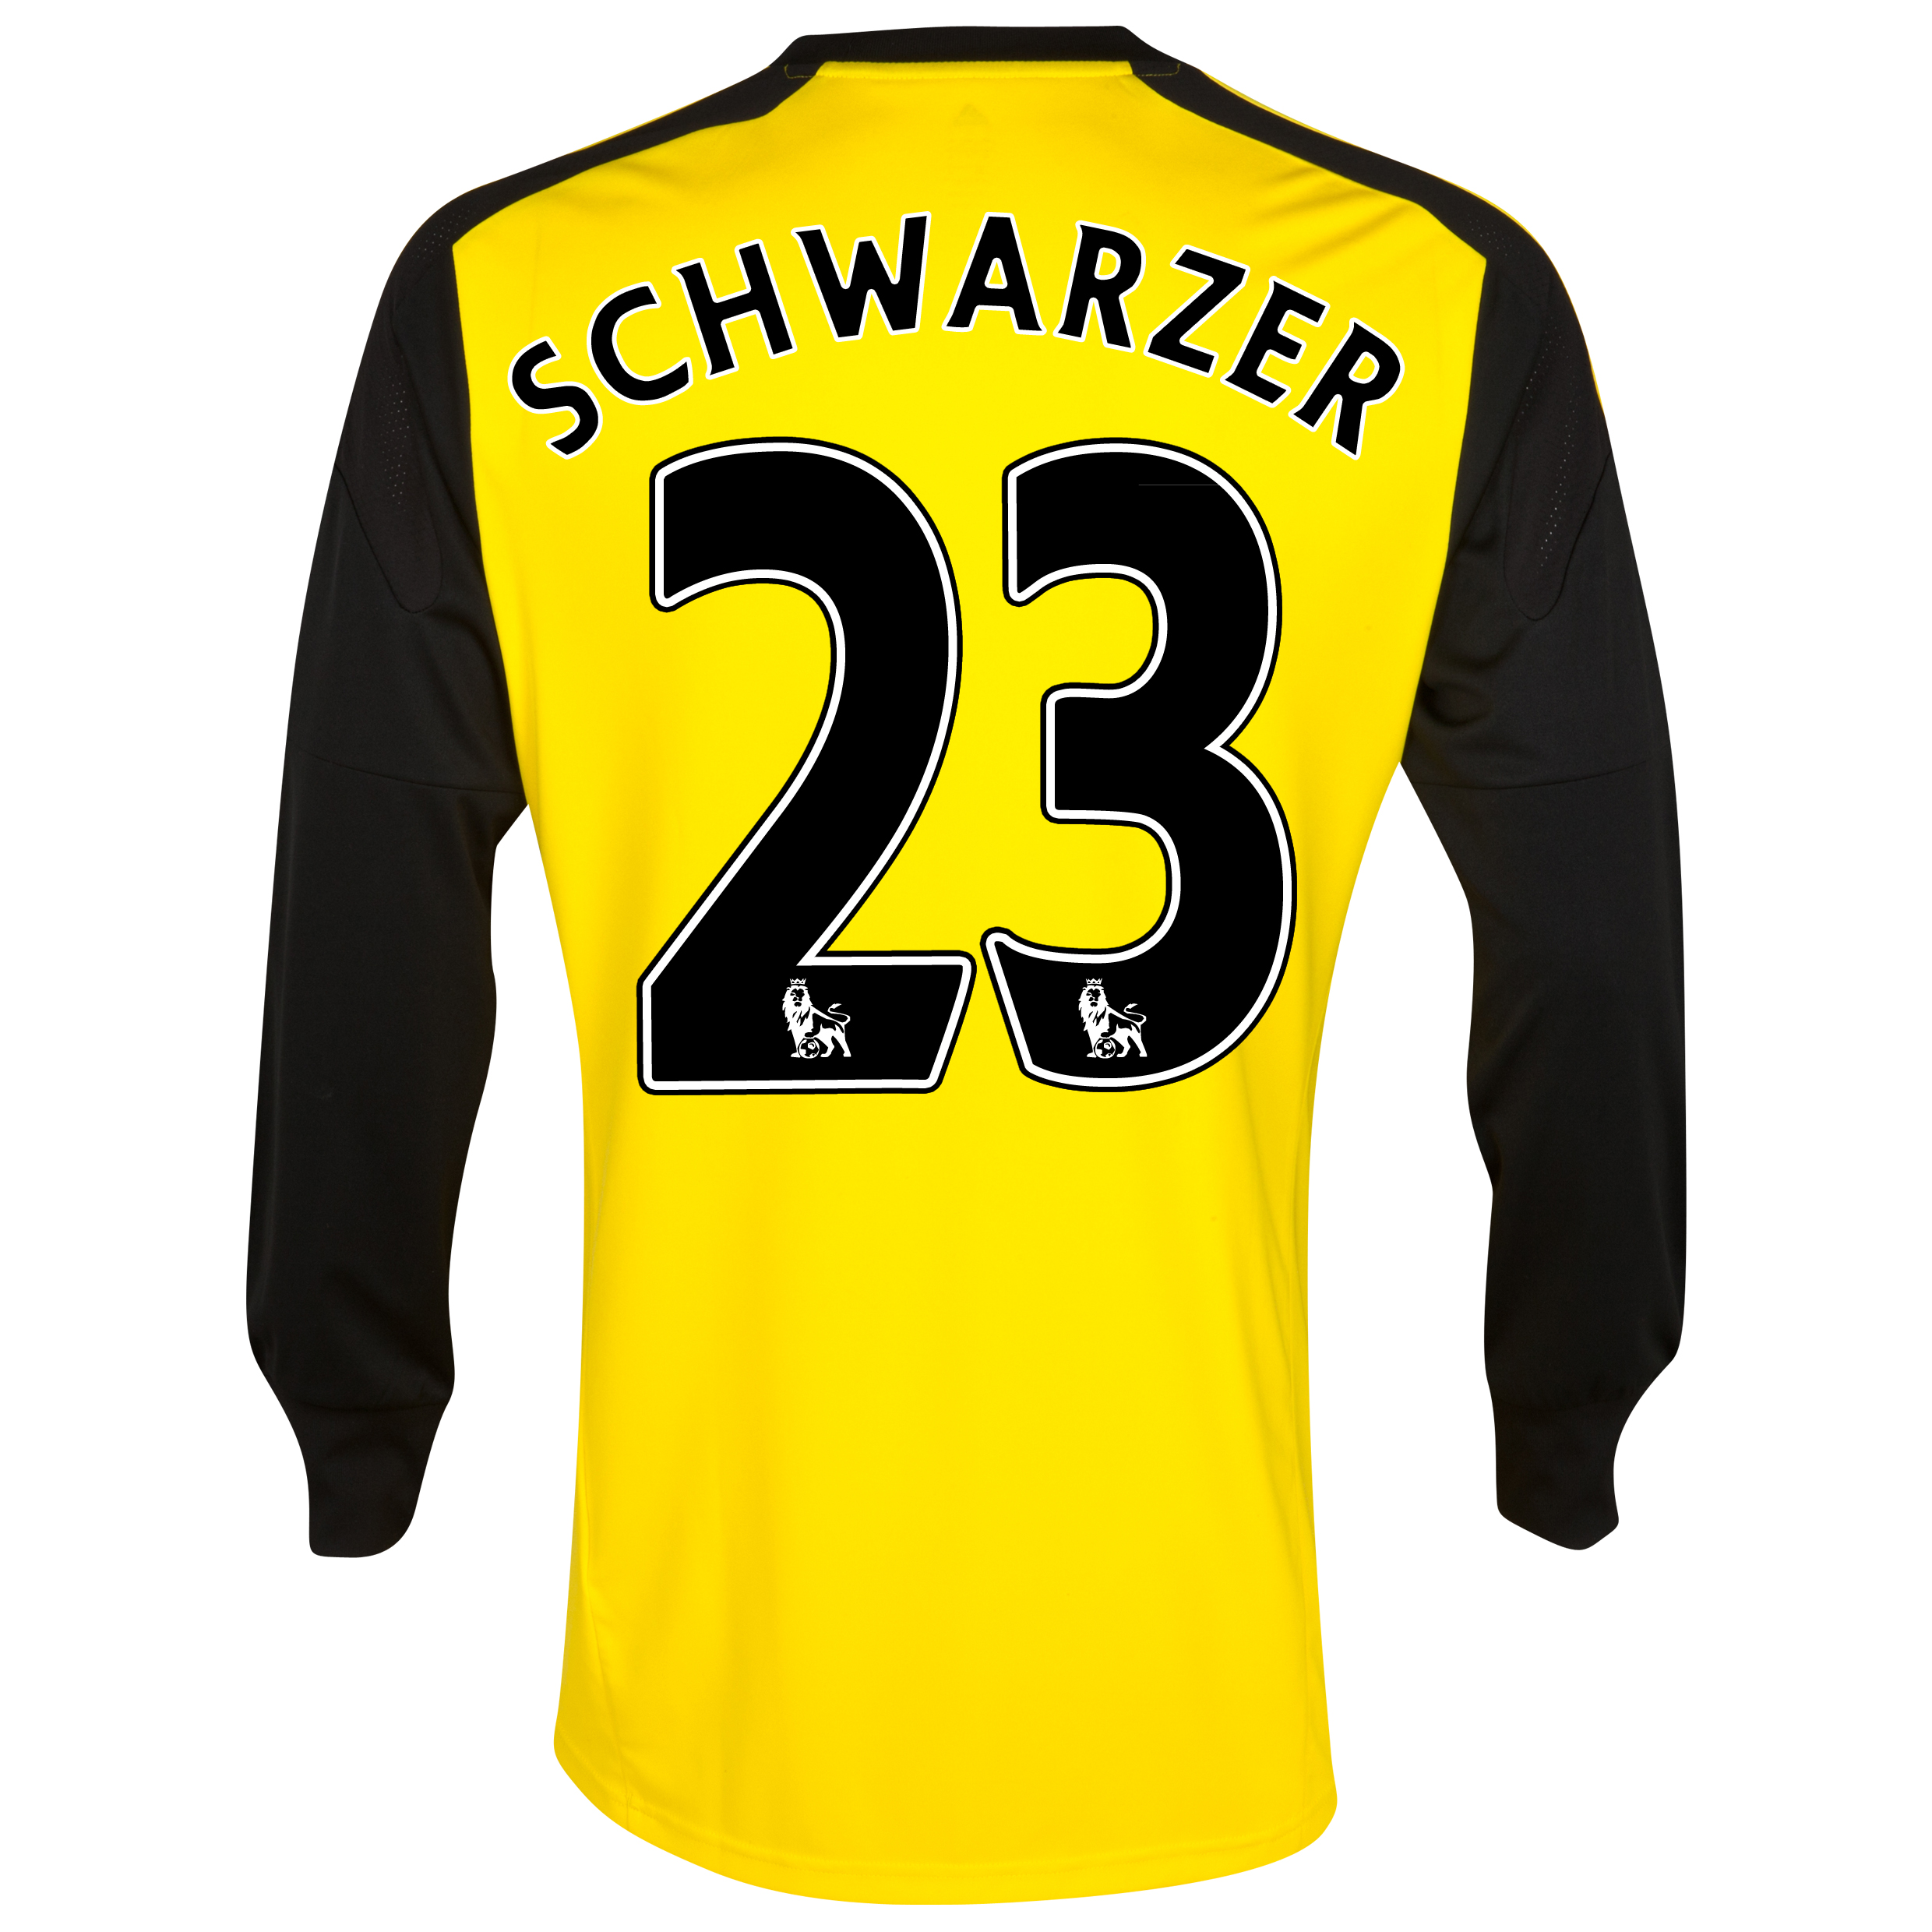 Chelsea Home Goalkeeper Mini Kit 2013/14 with Schwarzer 23 printing